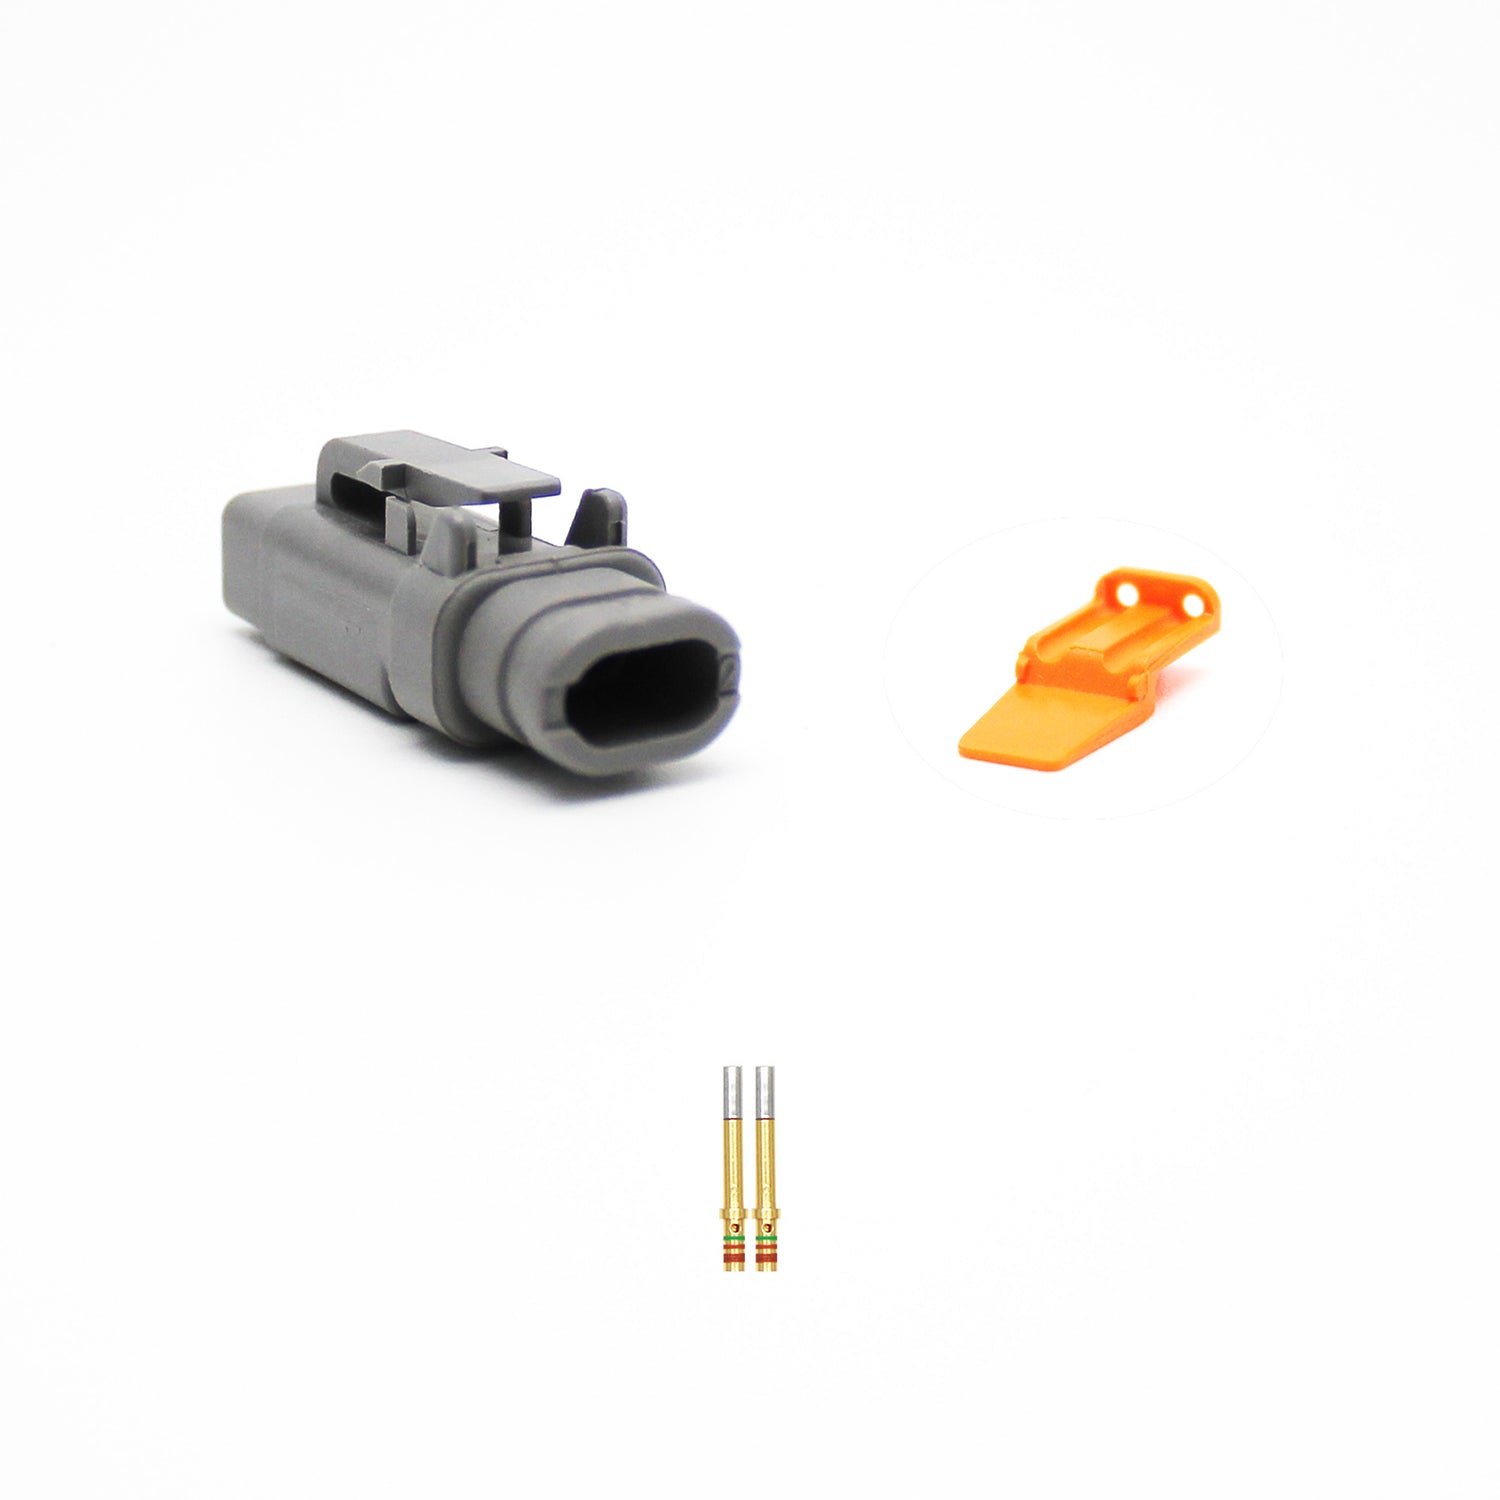 Deutsch Male & Female DTM Plug & Pins including Wedge Lock - AimShop.com